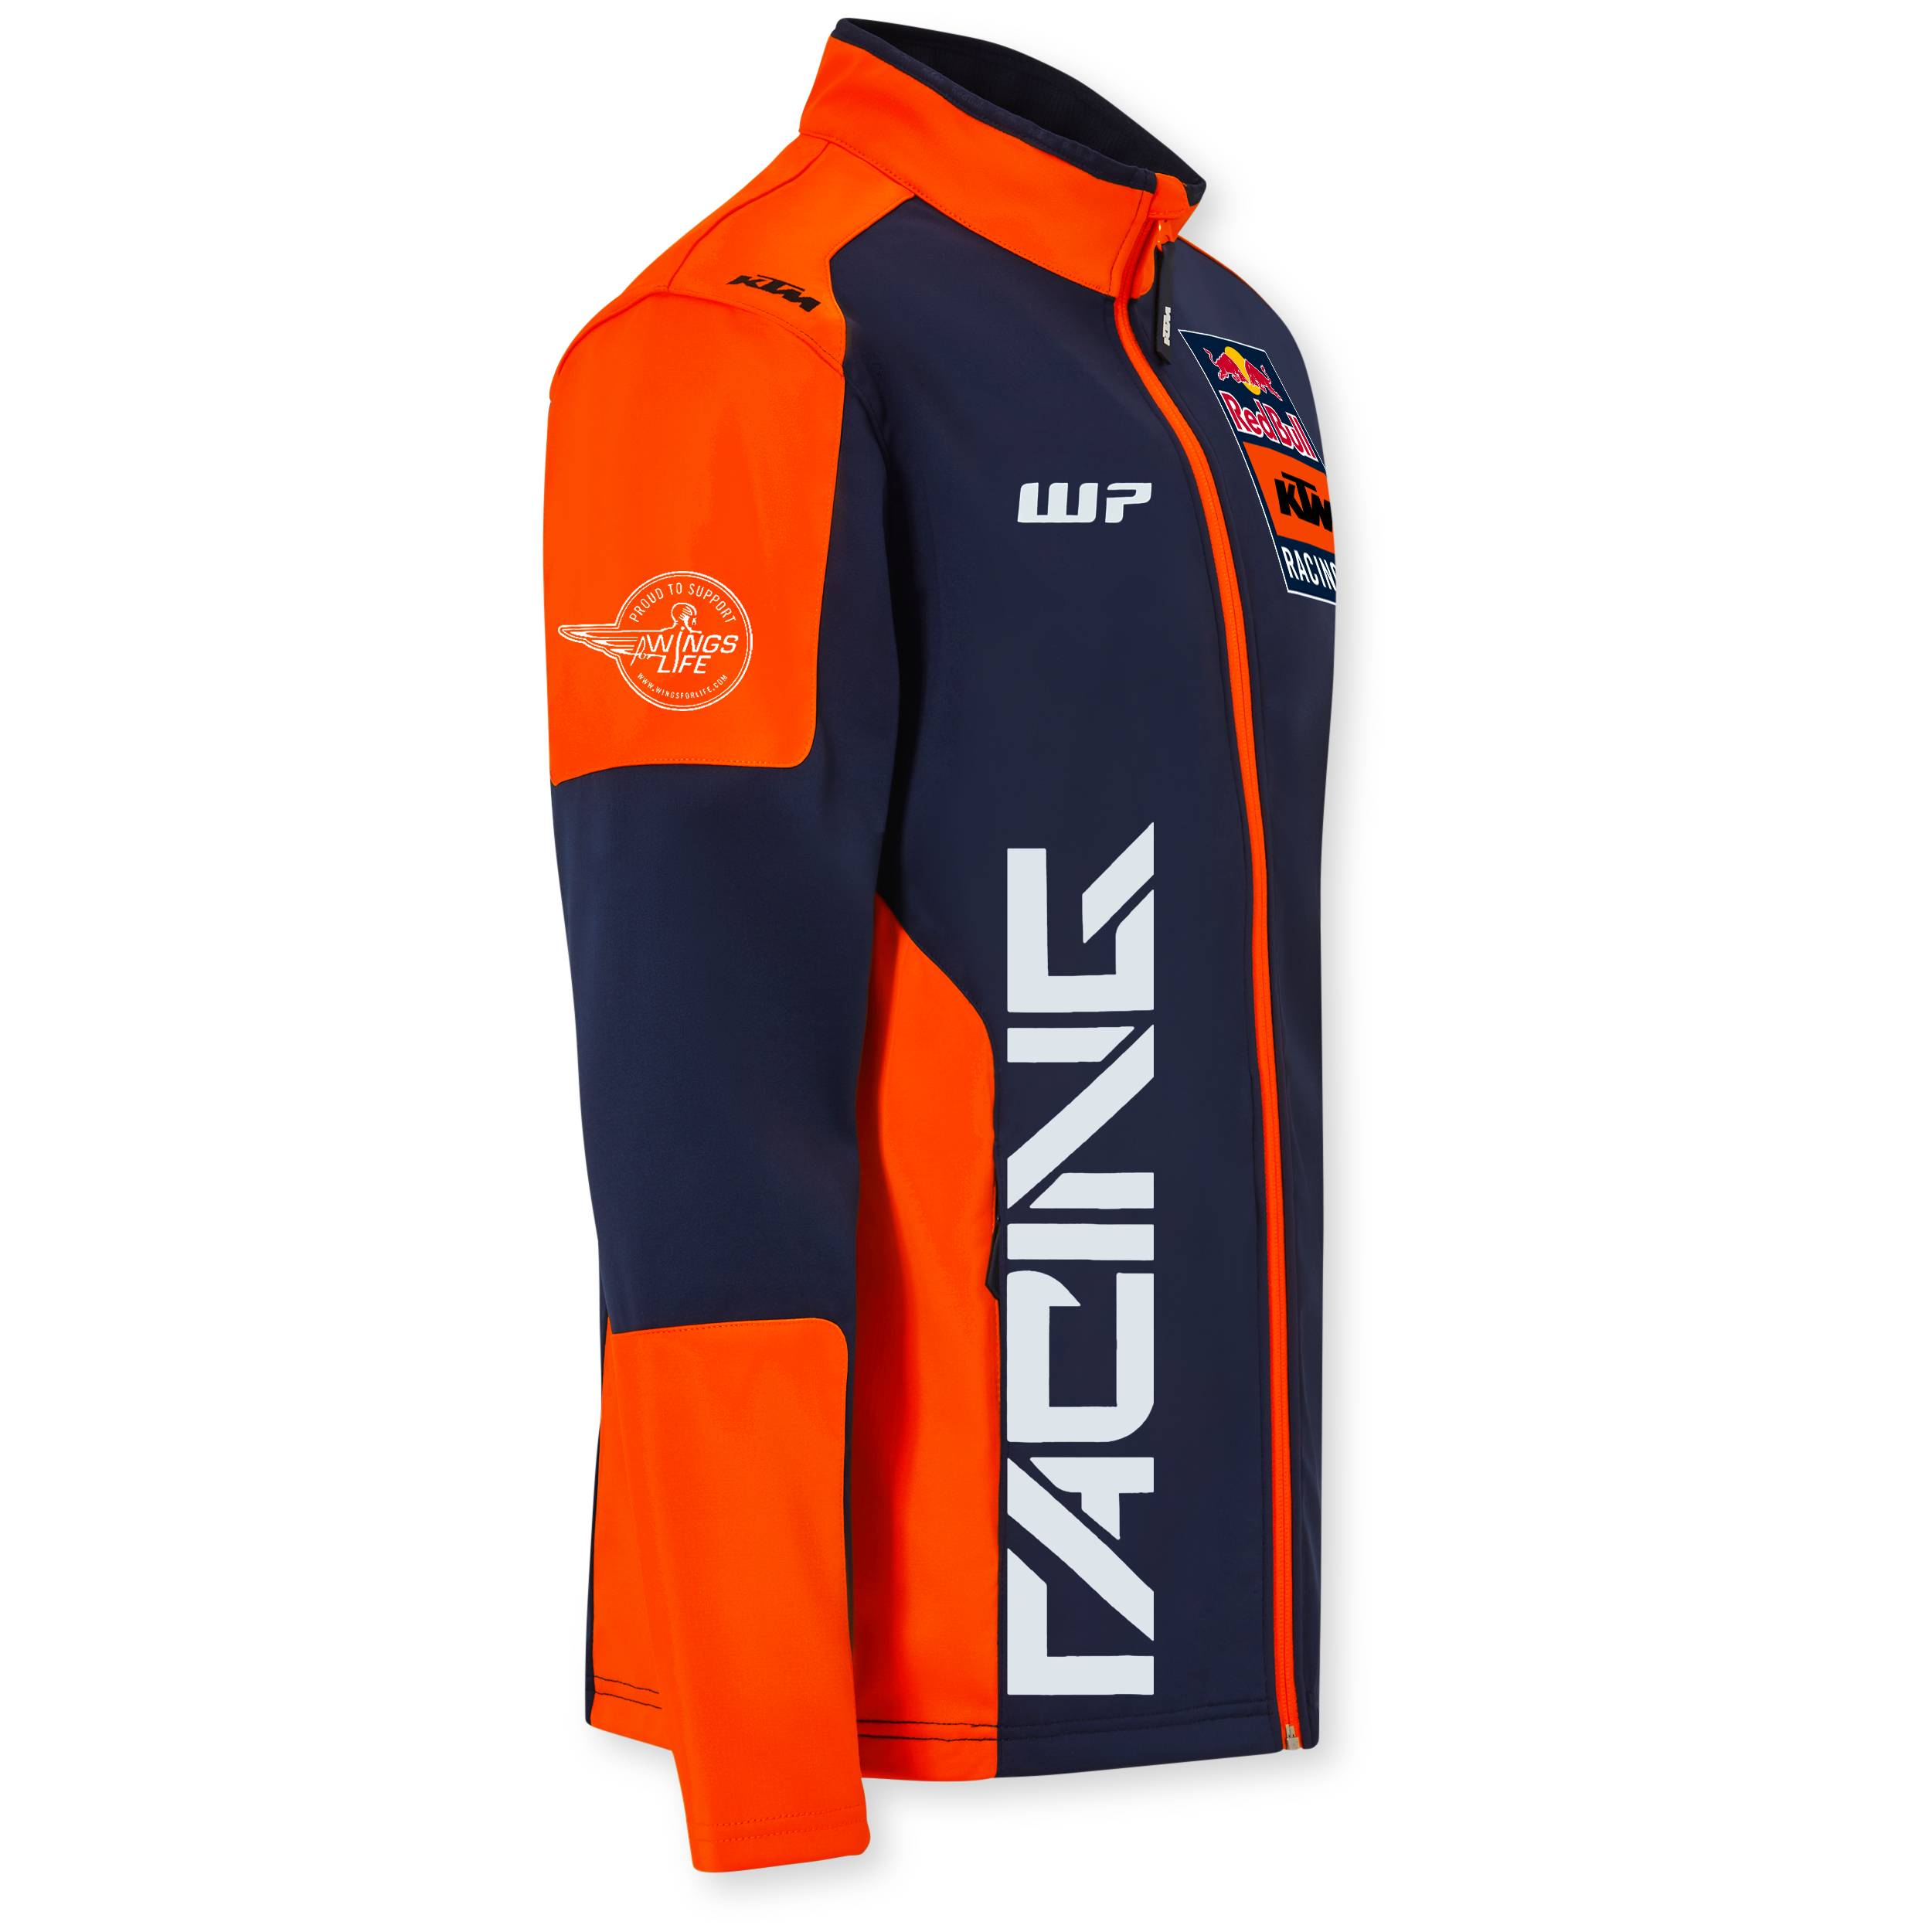 Red Bull KTM Racing Team Softshell Jacke Teamline - blau